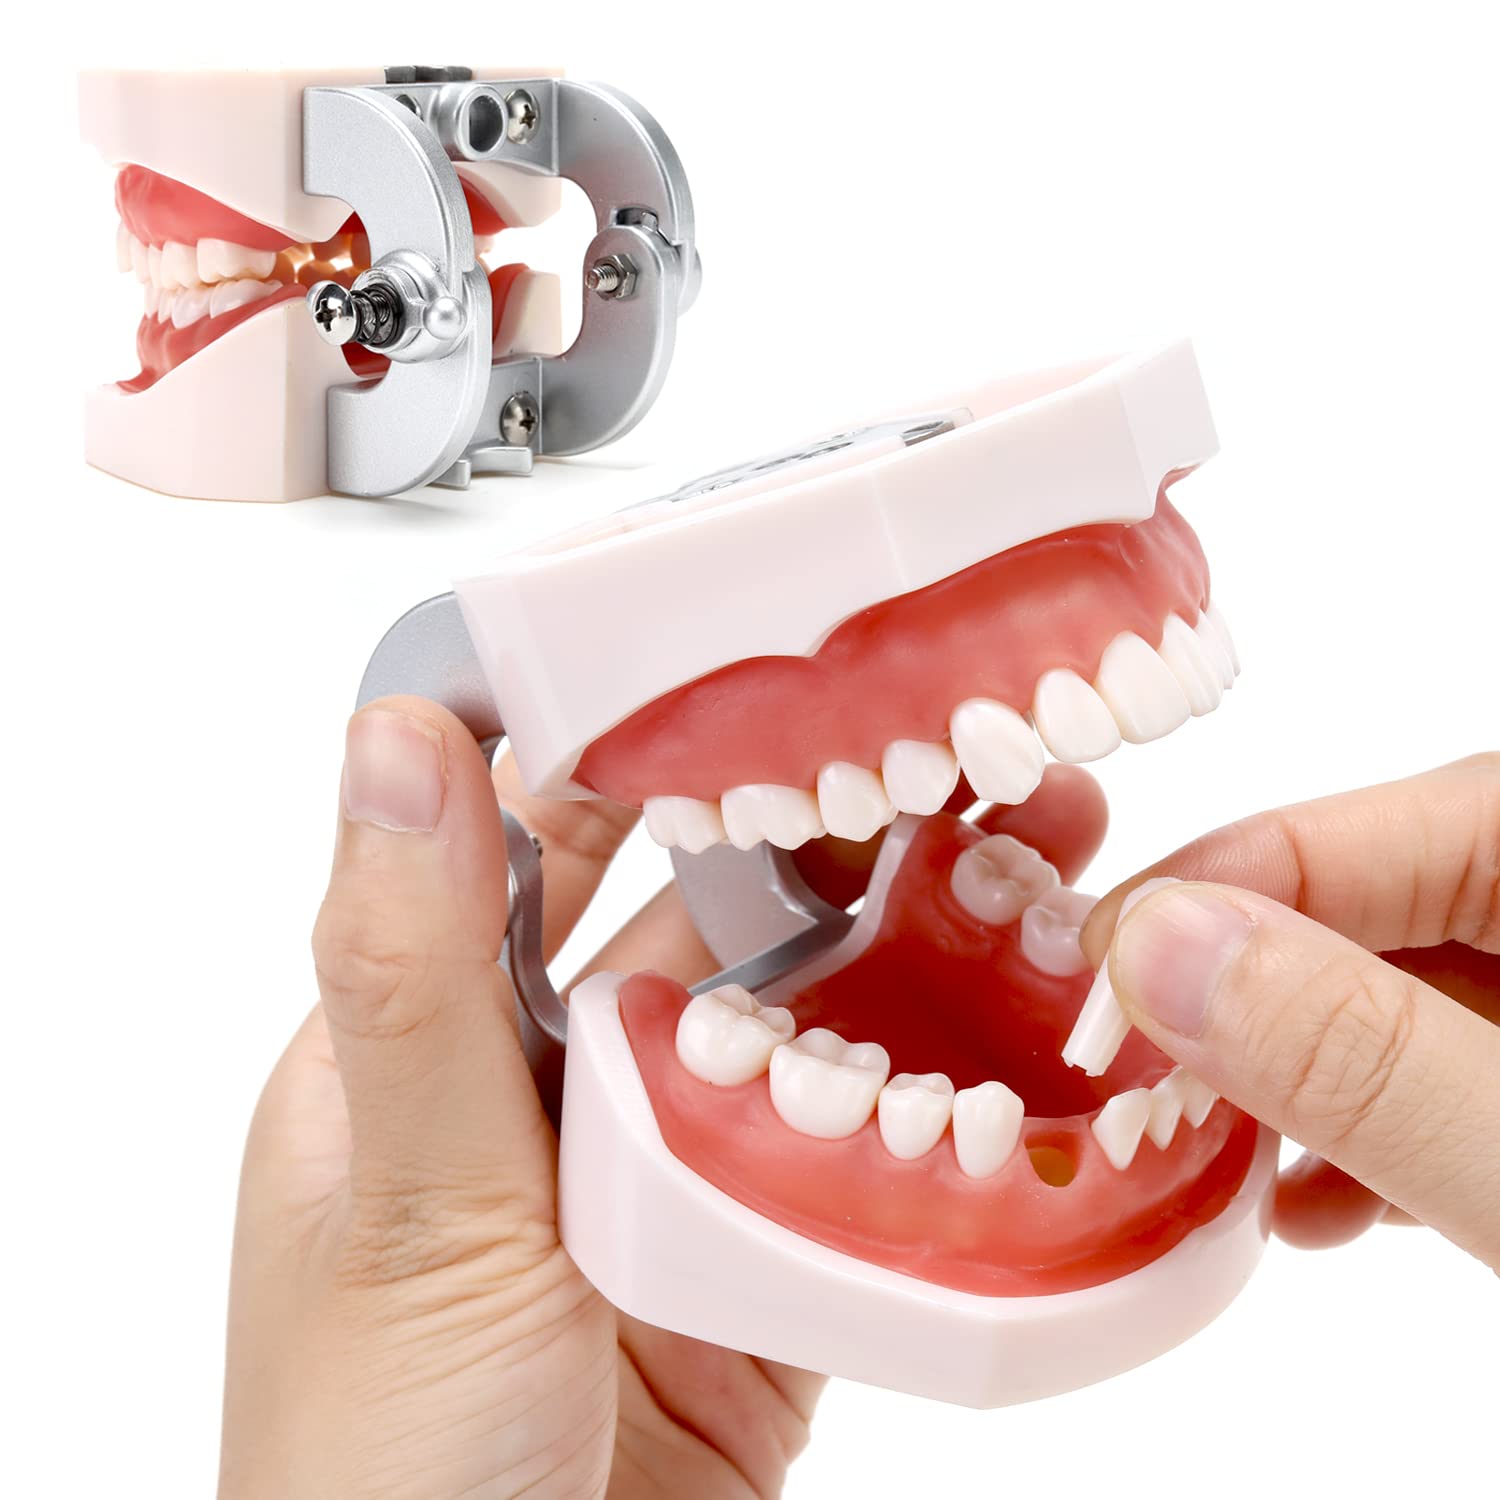 Dental Teeth Model Adult Anatomical Teeth Model with 28 Teeth Detachable Teeth